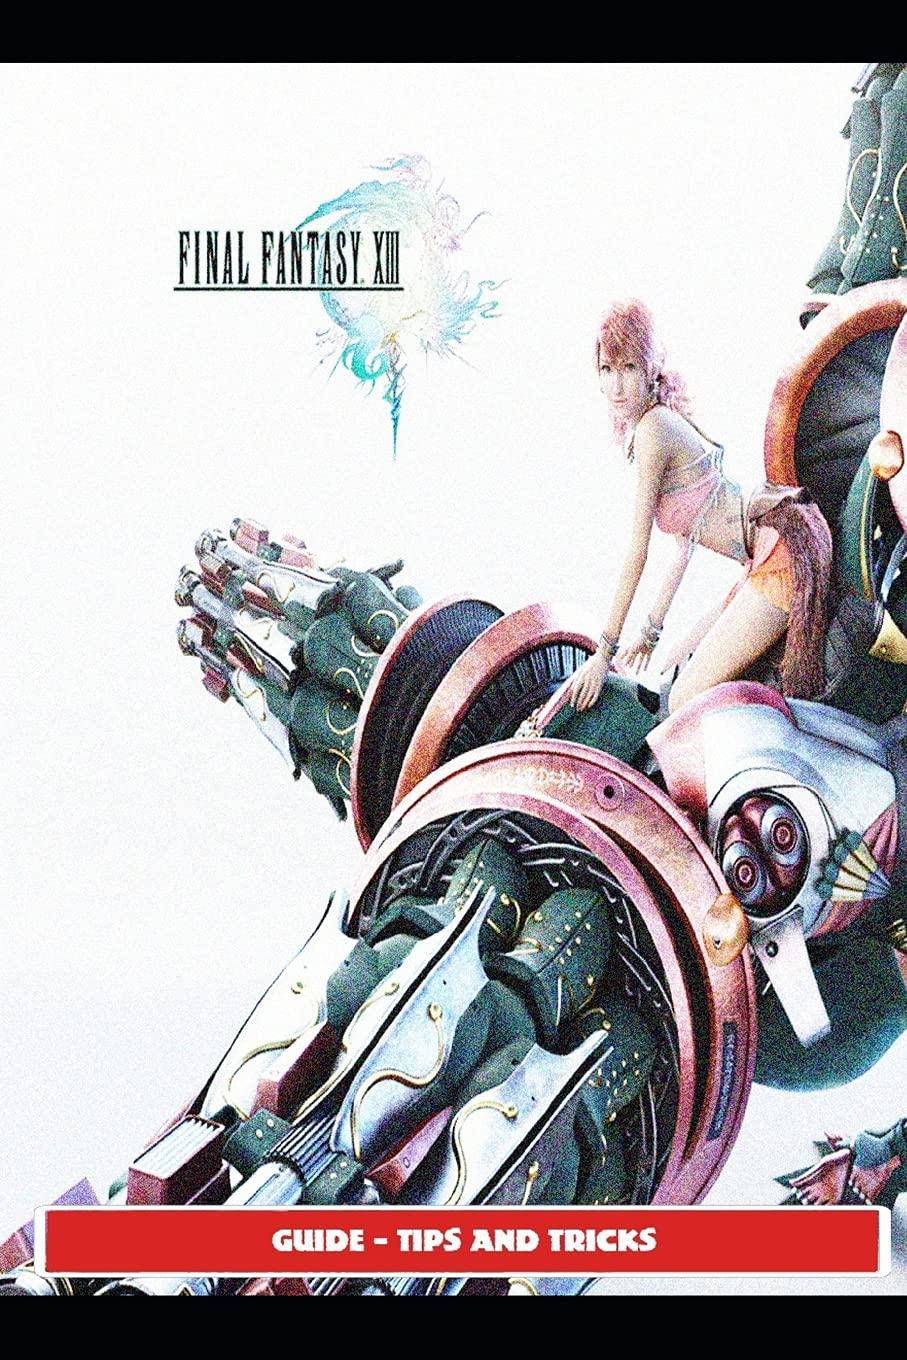 Final Fantasy XIII Guide - Tips and Tricks - SureShot Books Publishing LLC